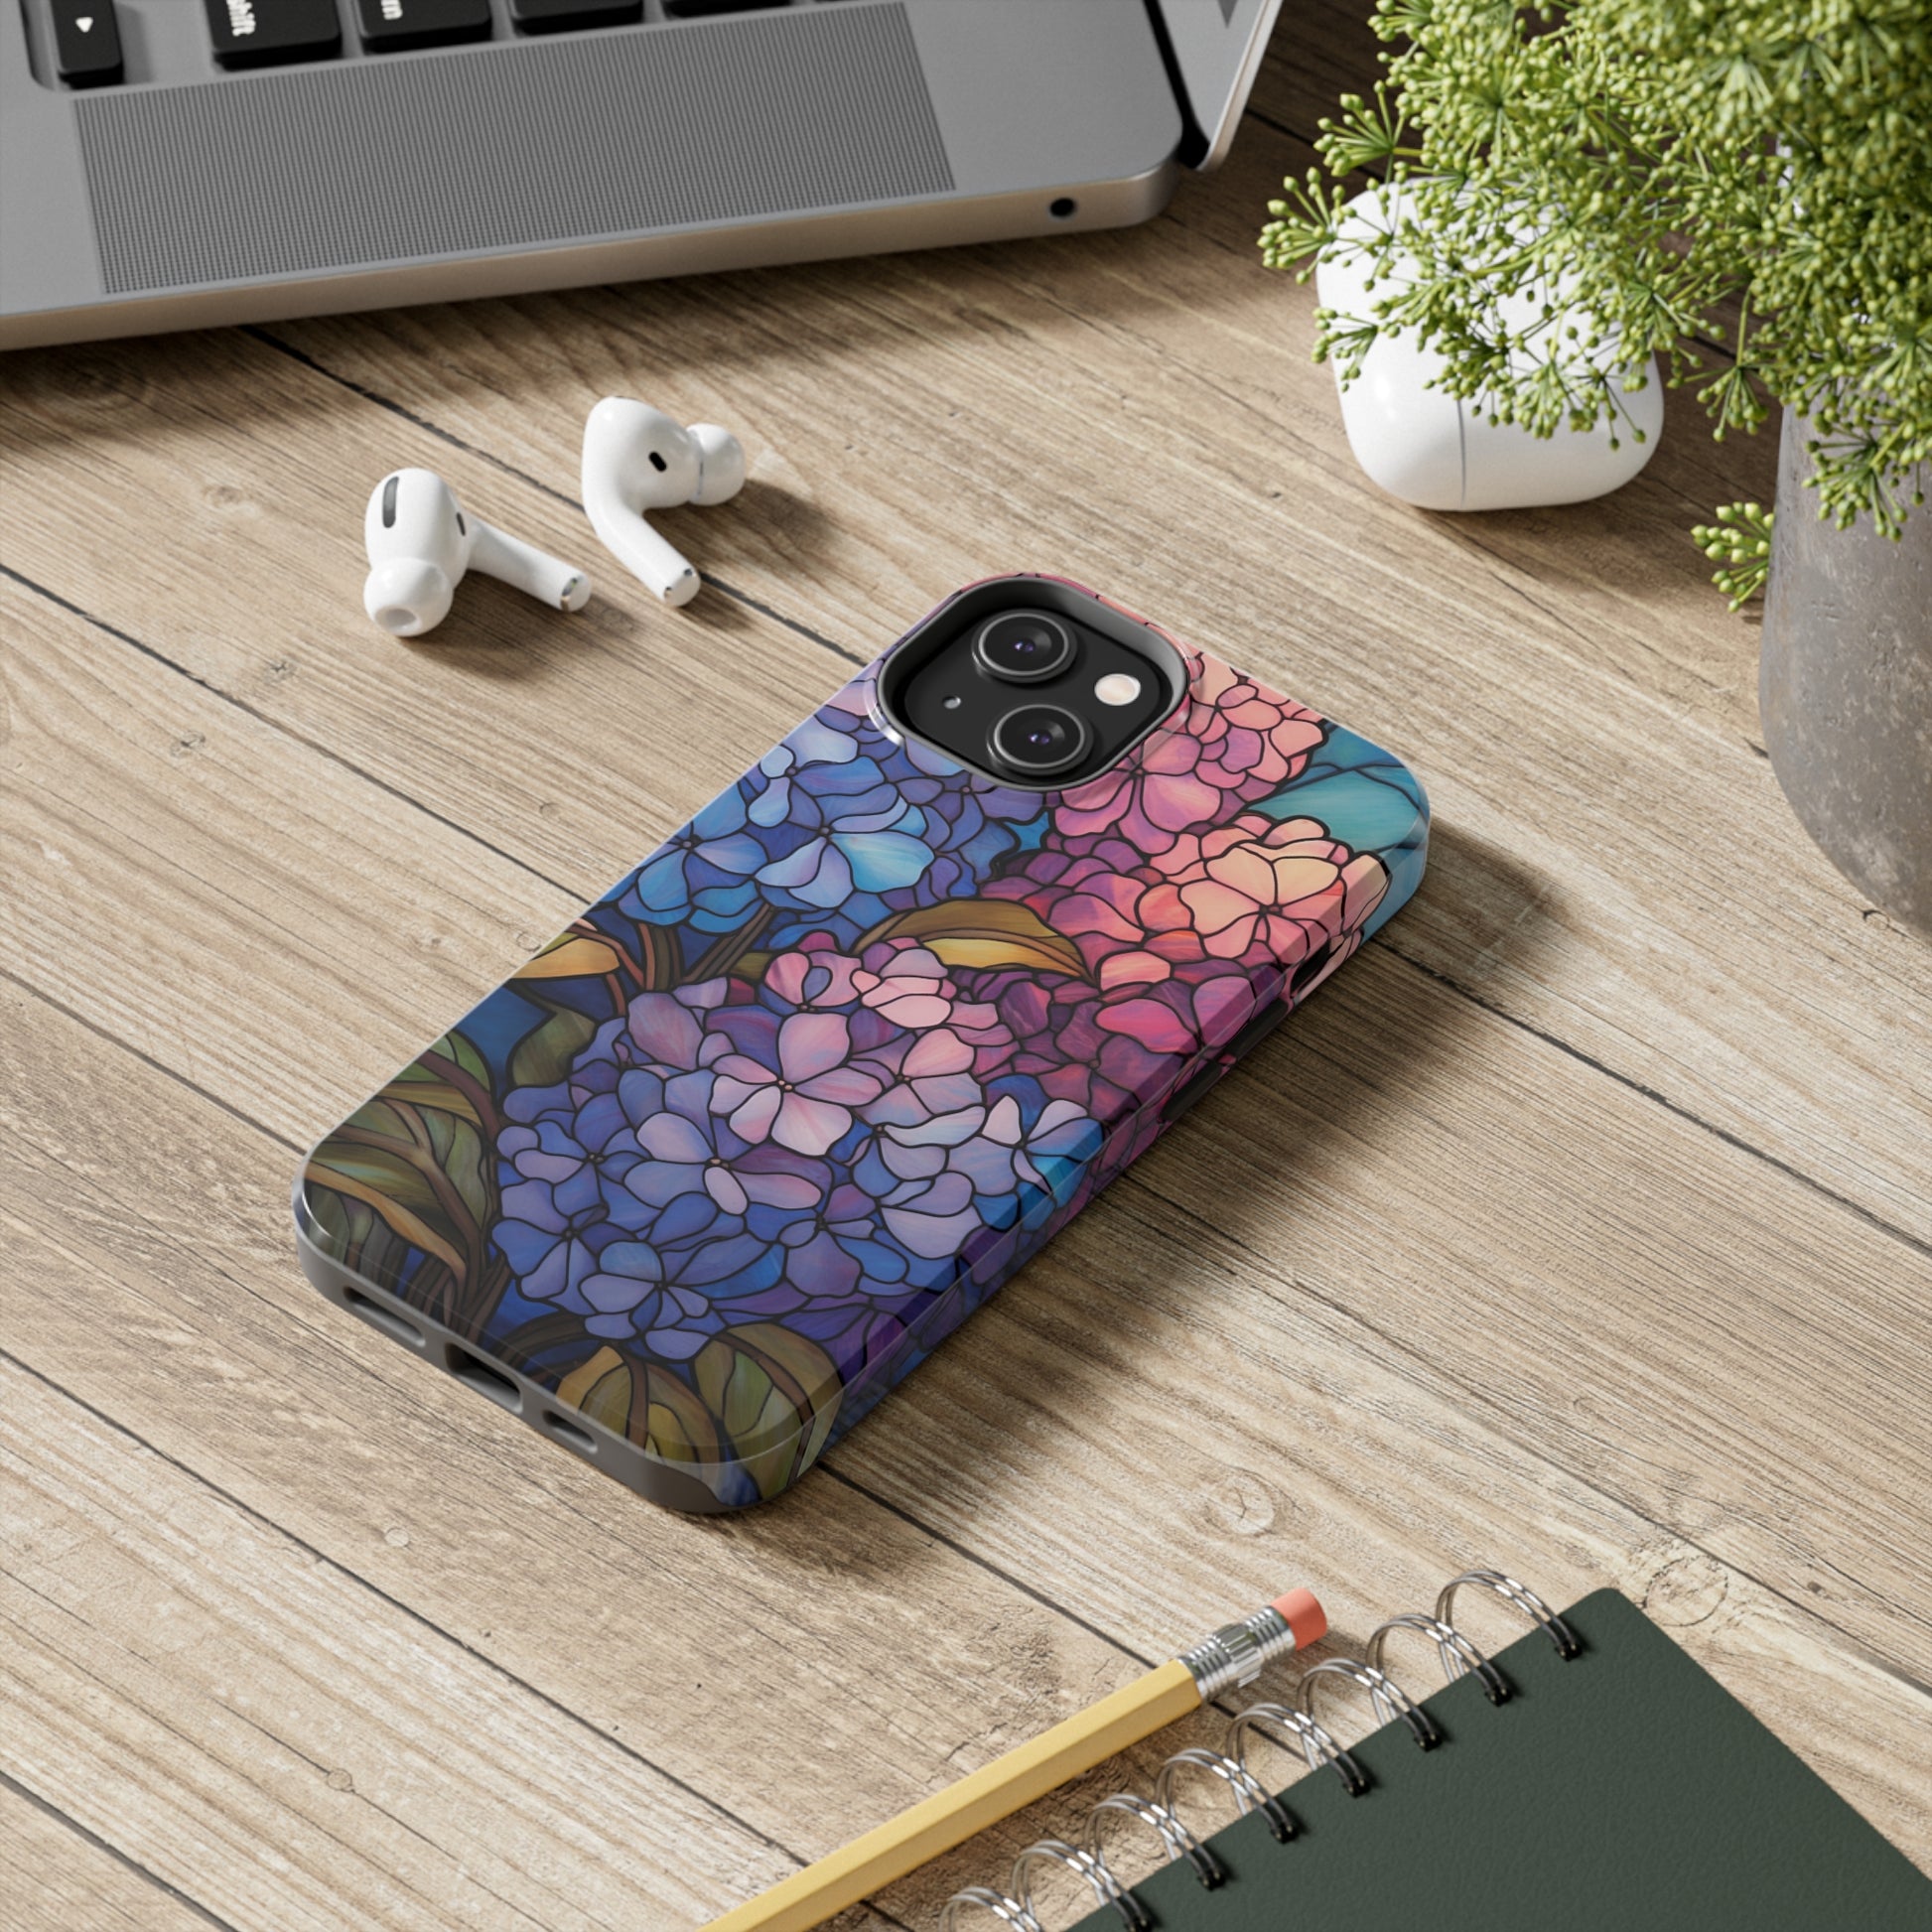 Cute floral phone case